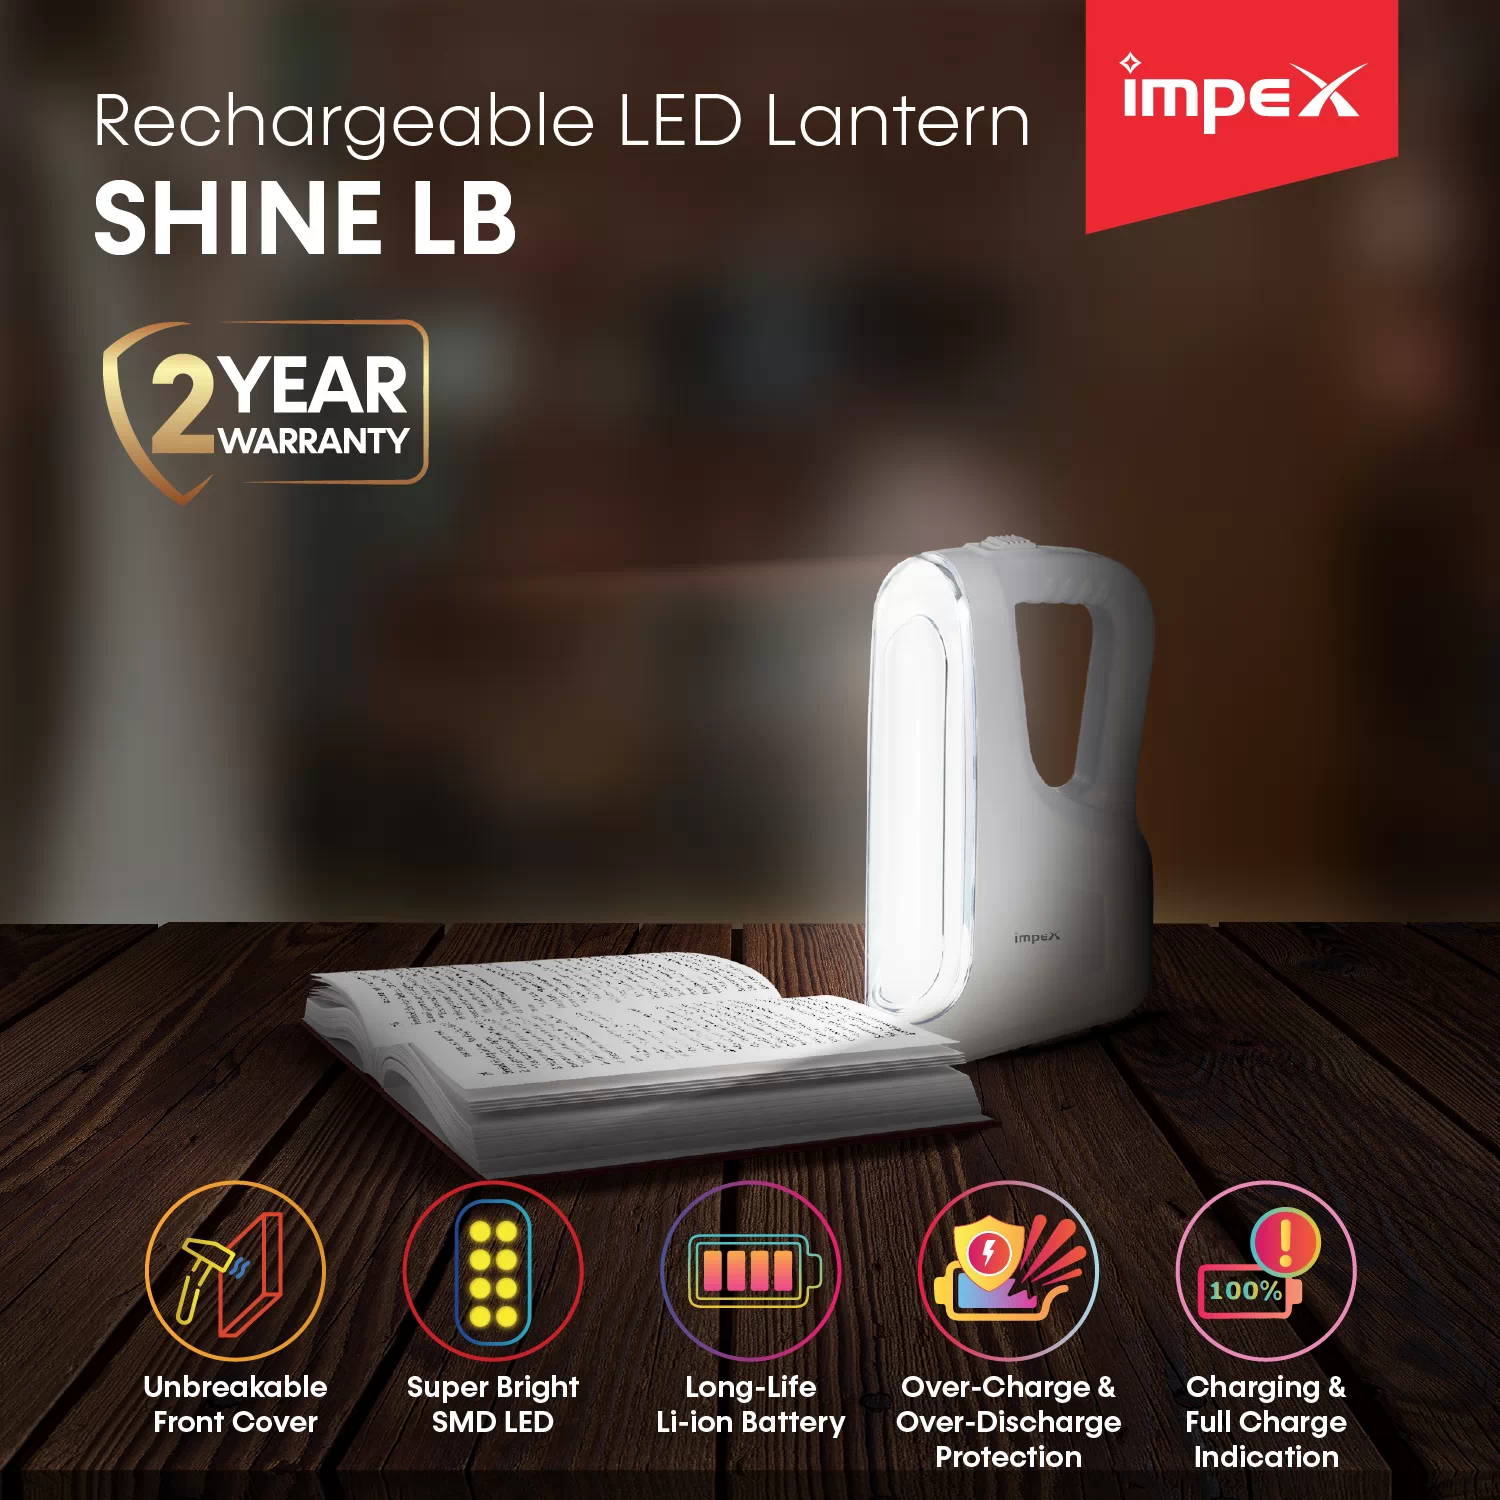 Rechargeable LED Emergency Light | Shine LB